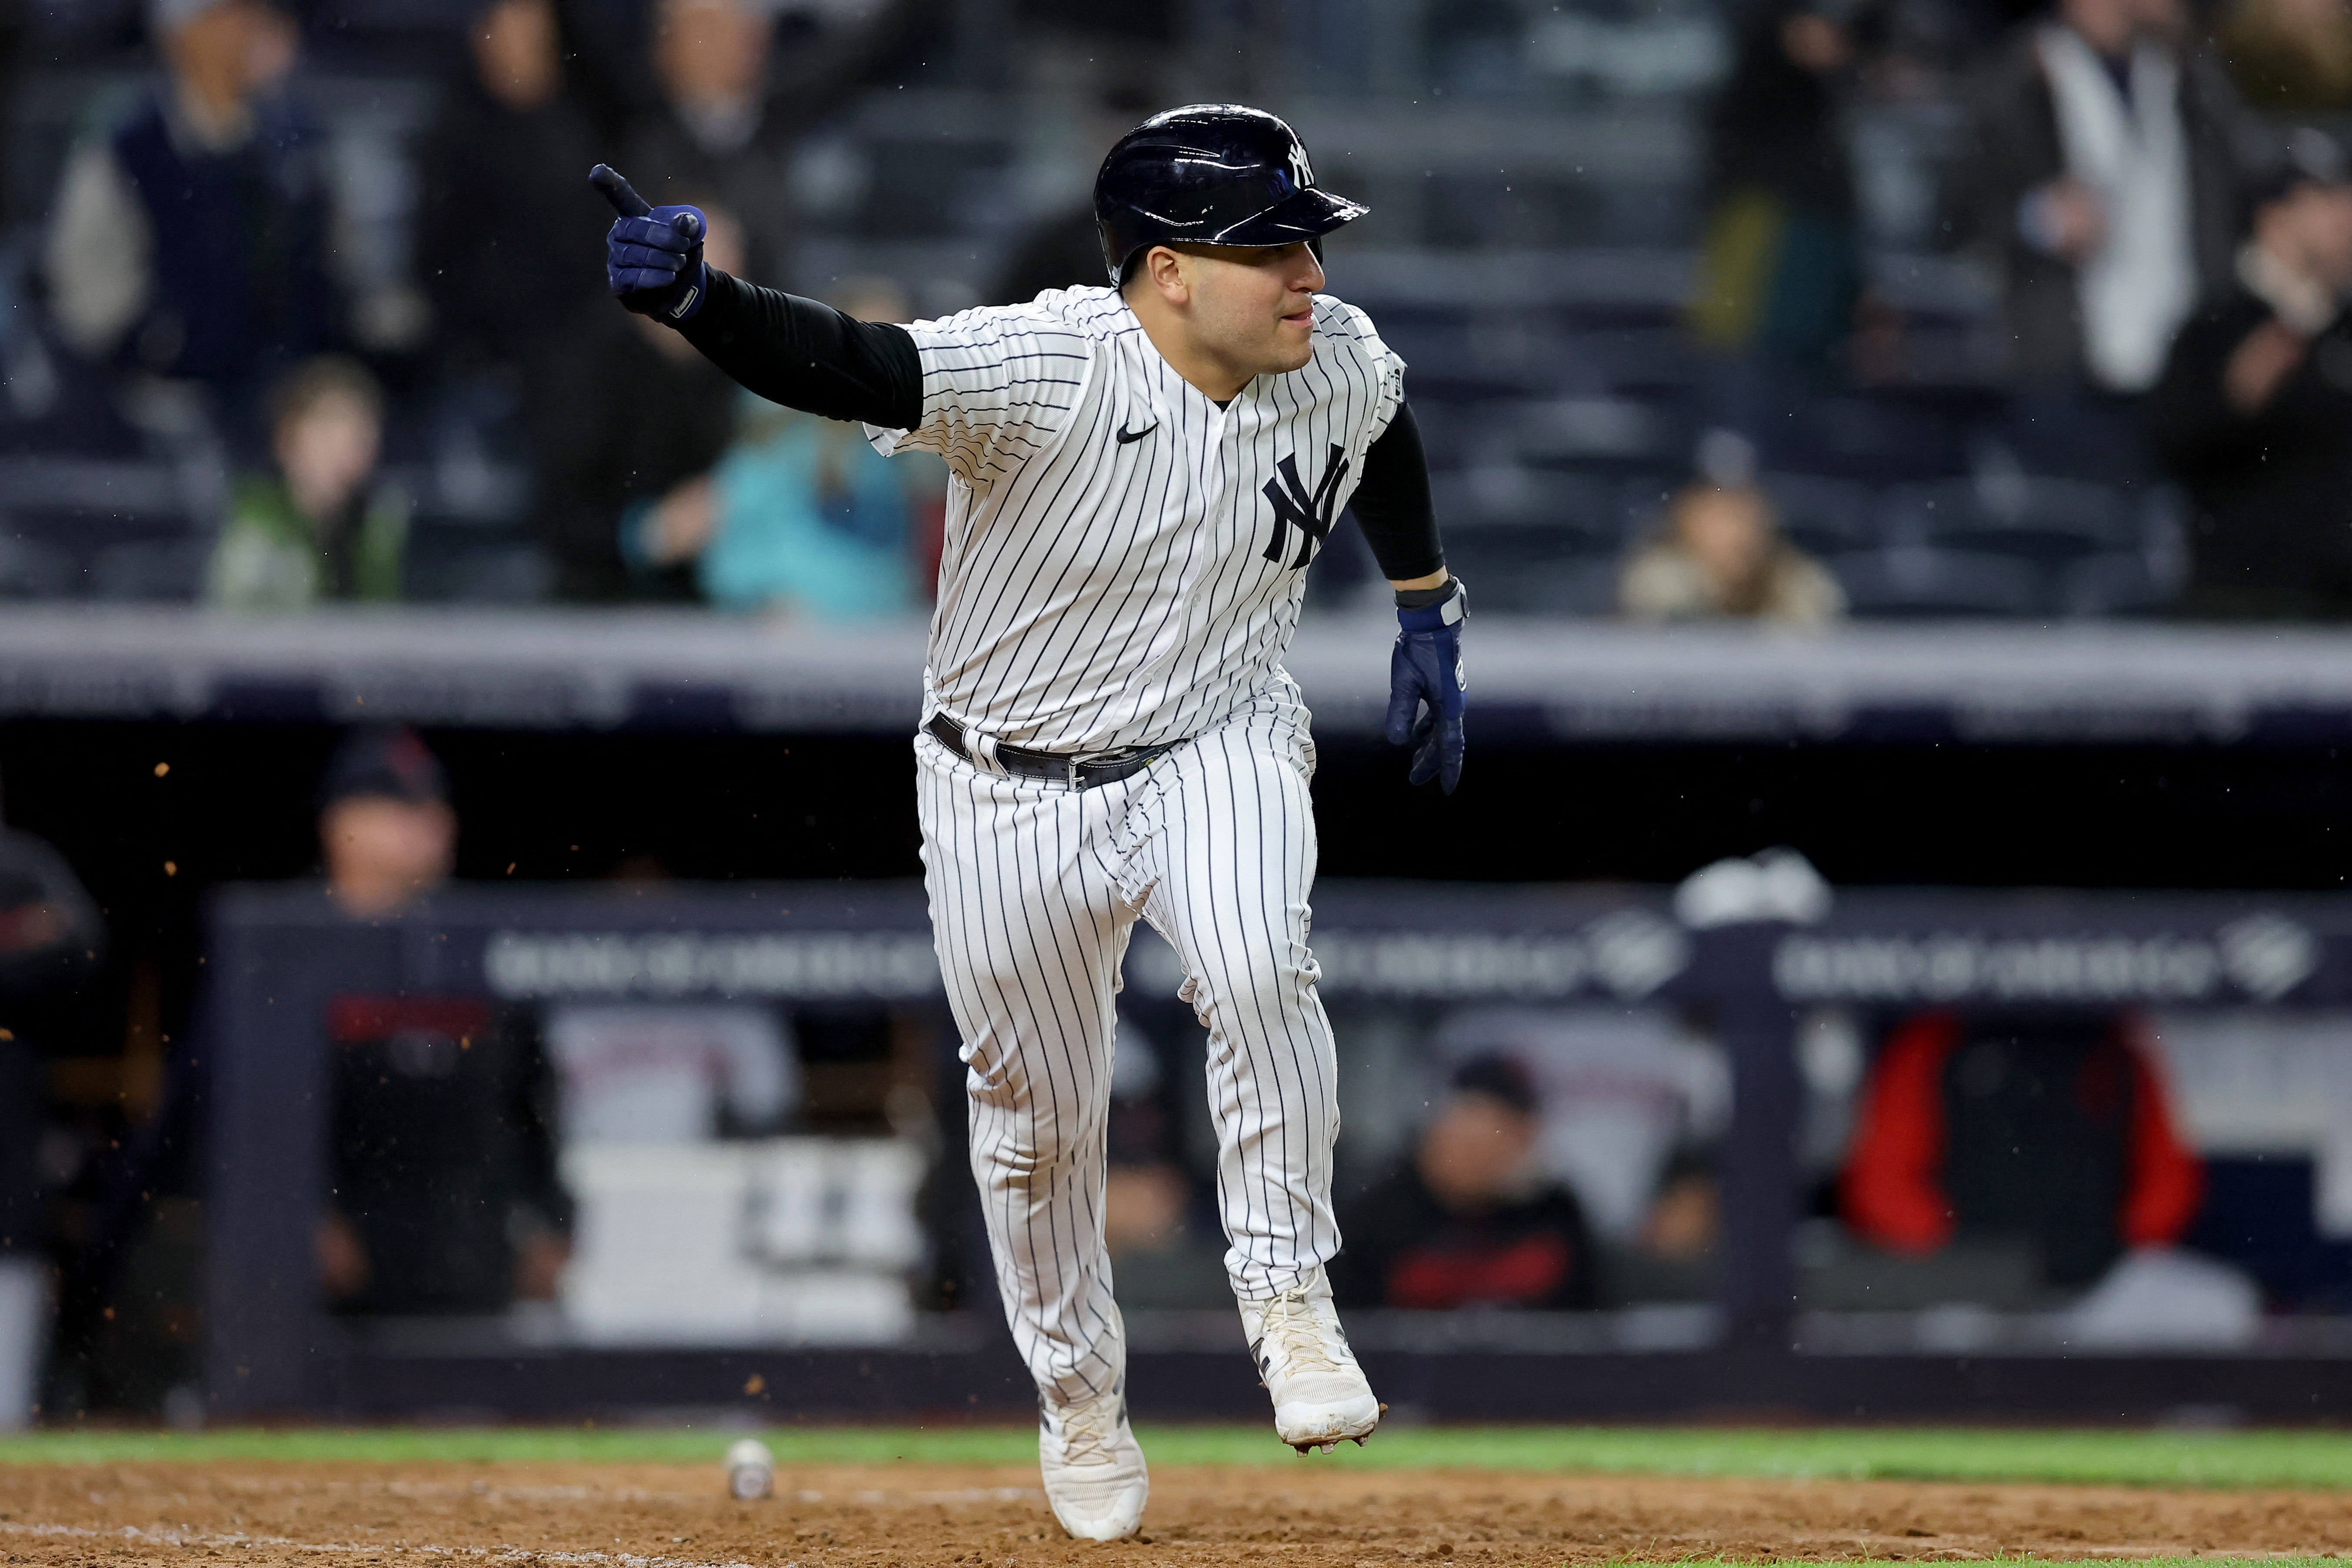 Jose Trevino hits pinch-hit walk-off single as Yankees win in 10